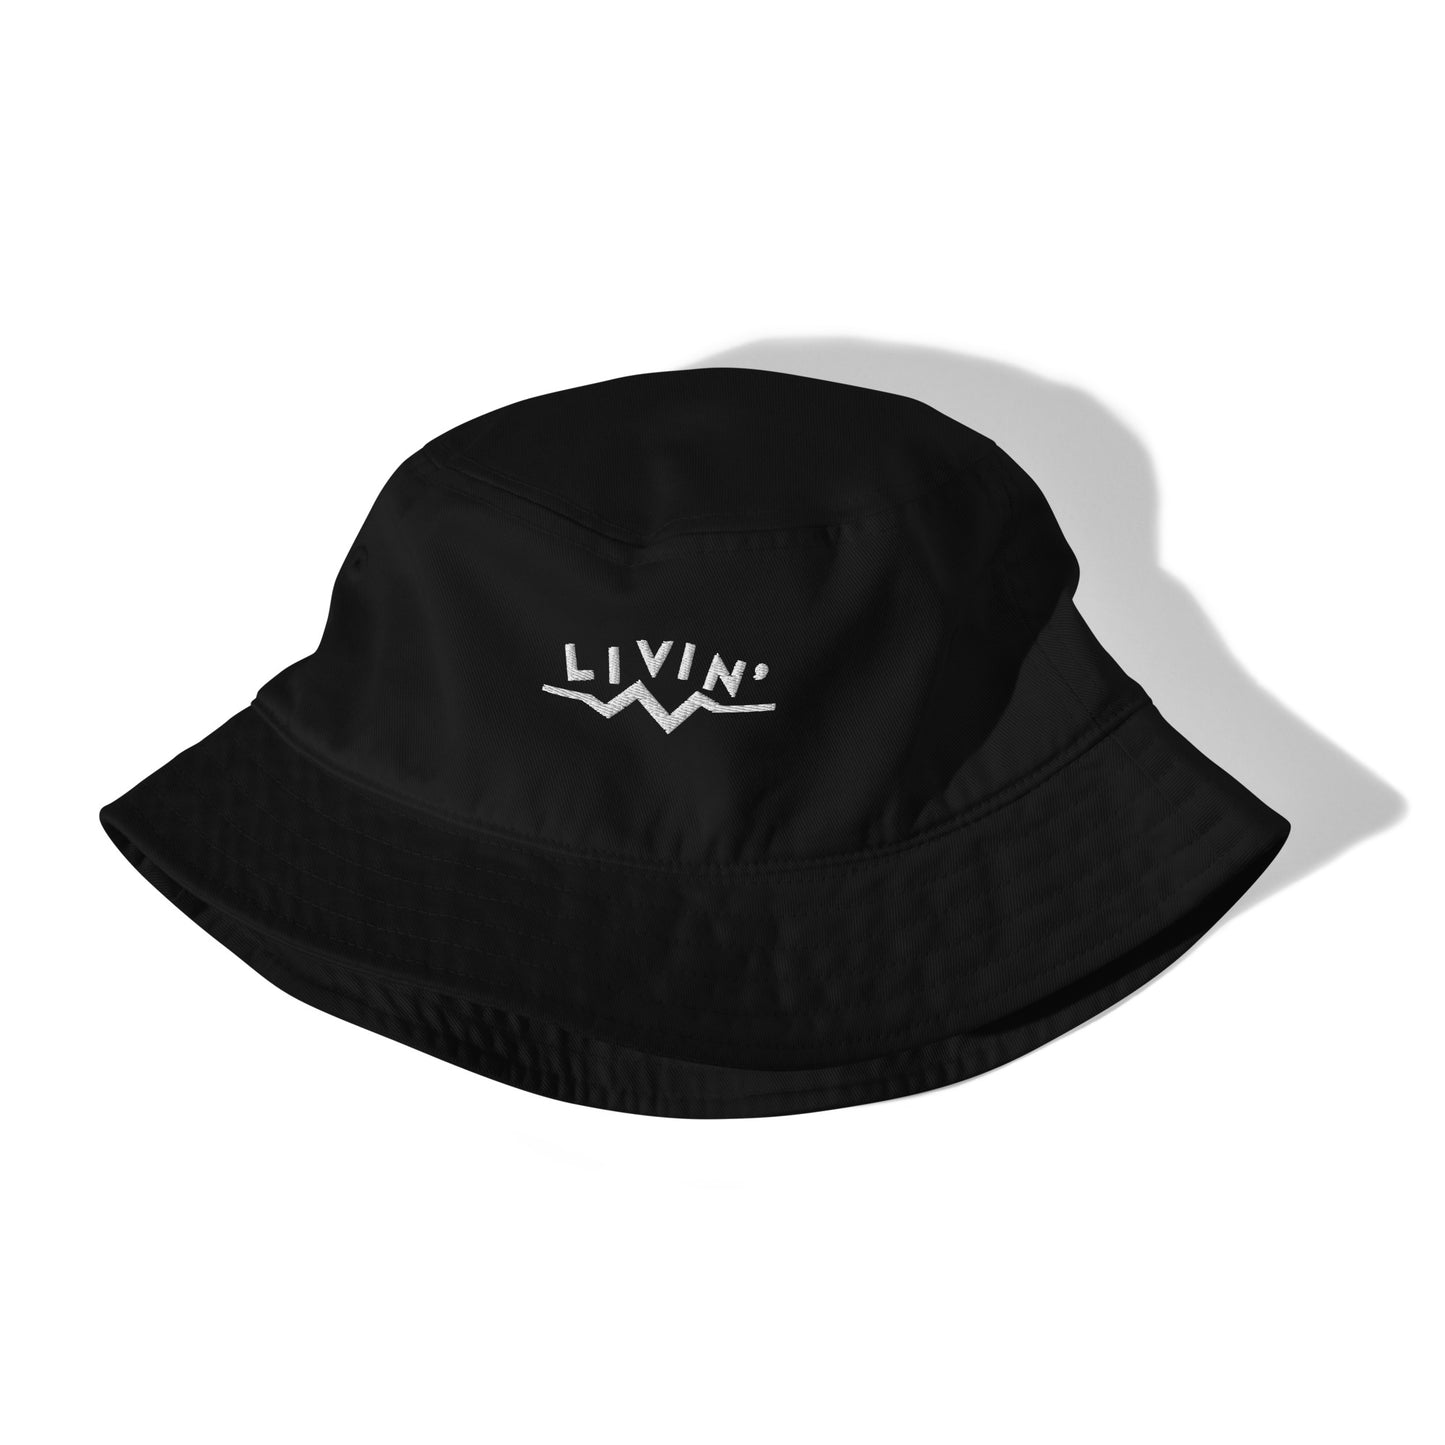 "Livin" Organic Bucket Hat